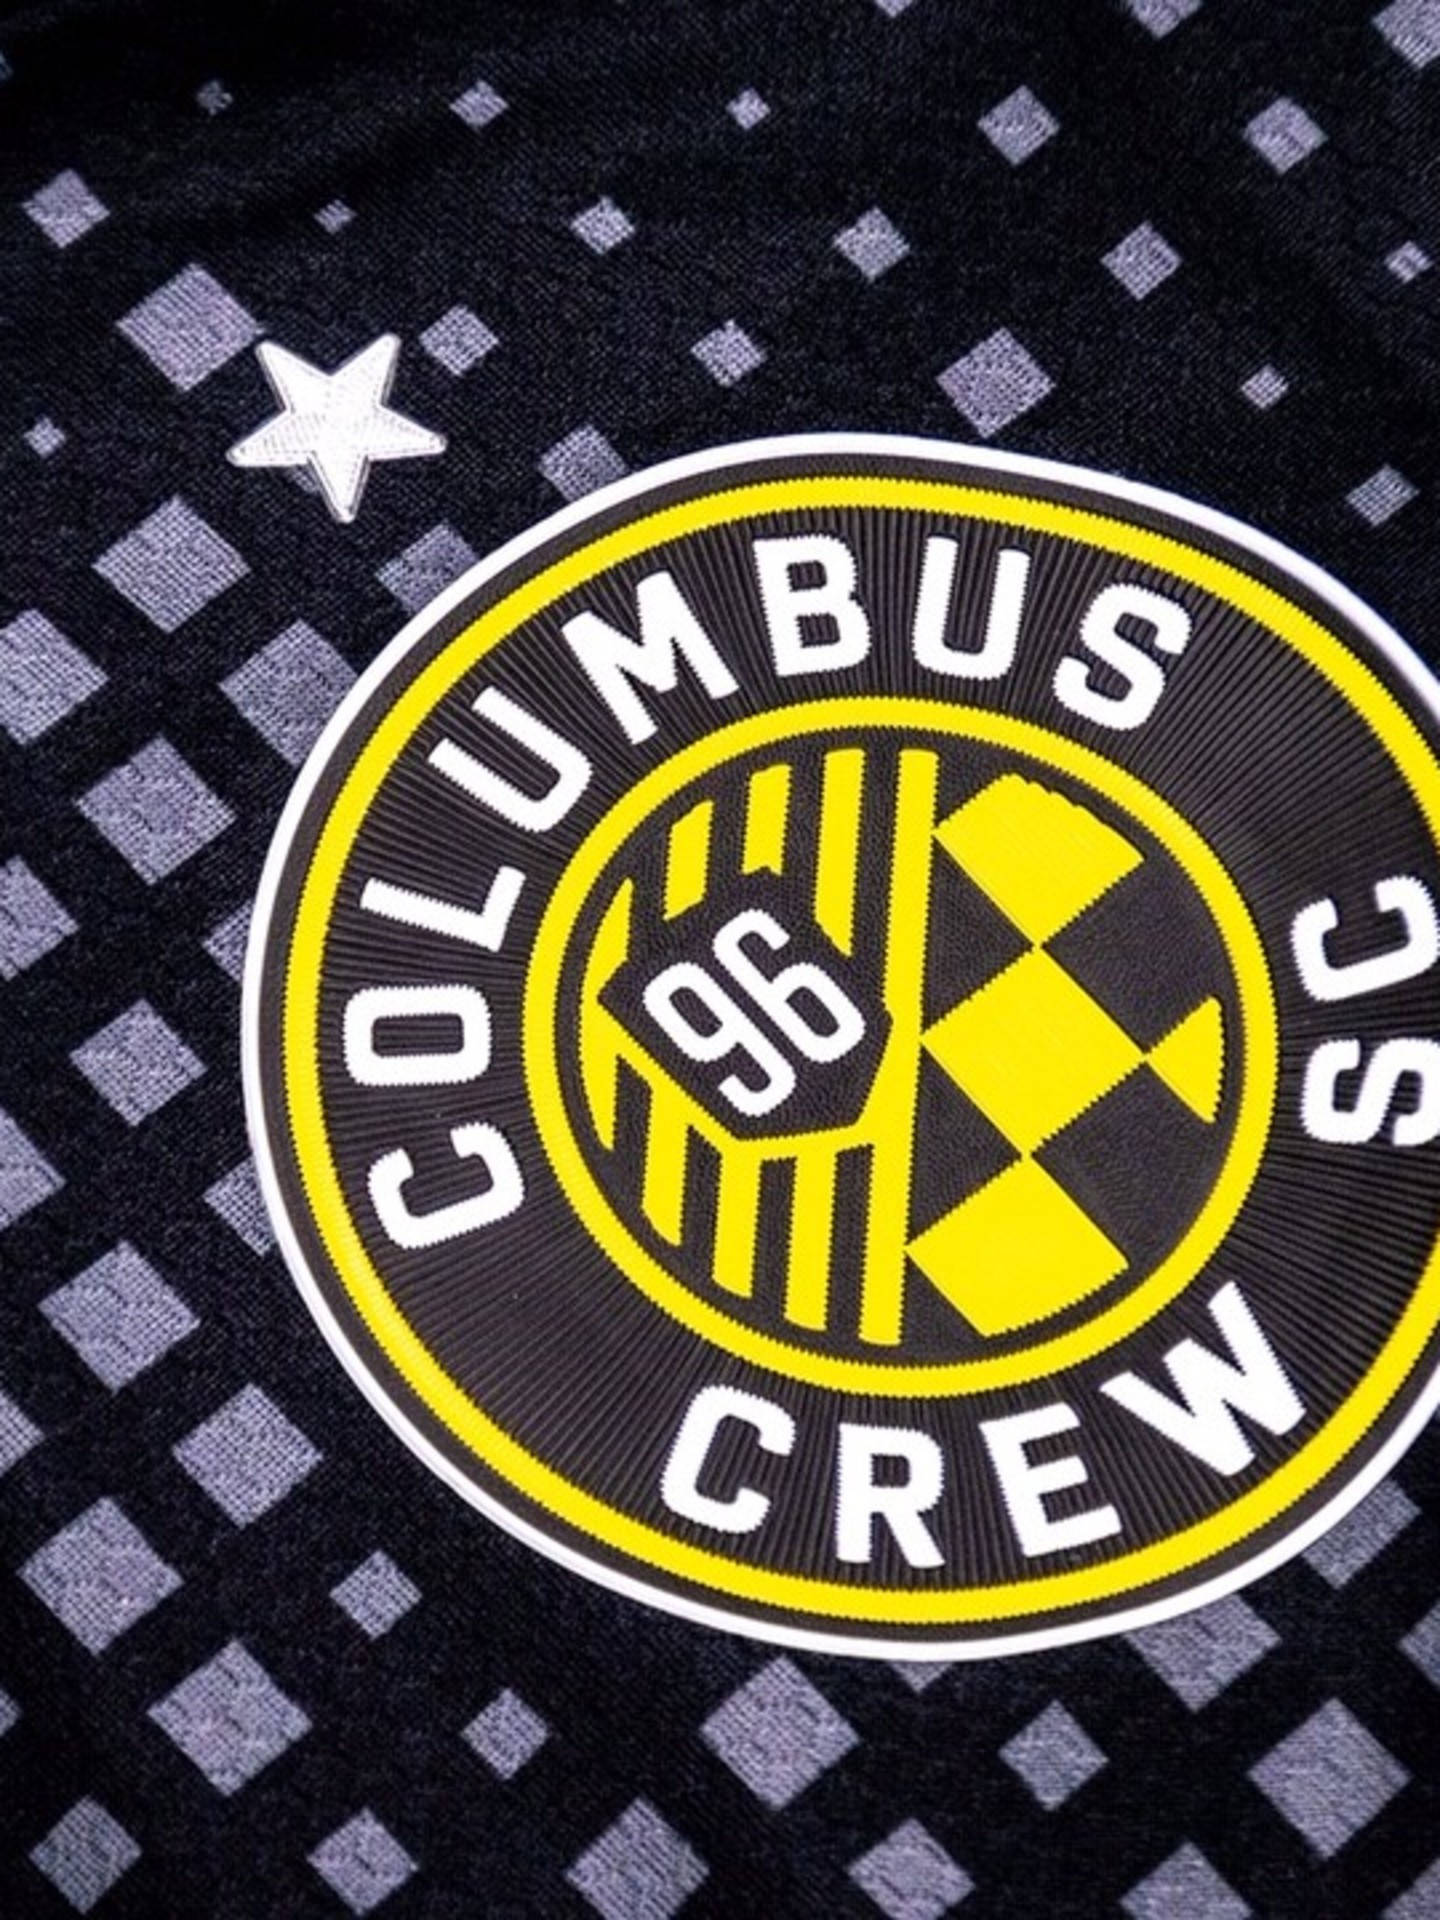 Elnuevo Logotipo Del Columbus Crew En Un Elegante Fondo Negro. Fondo de pantalla